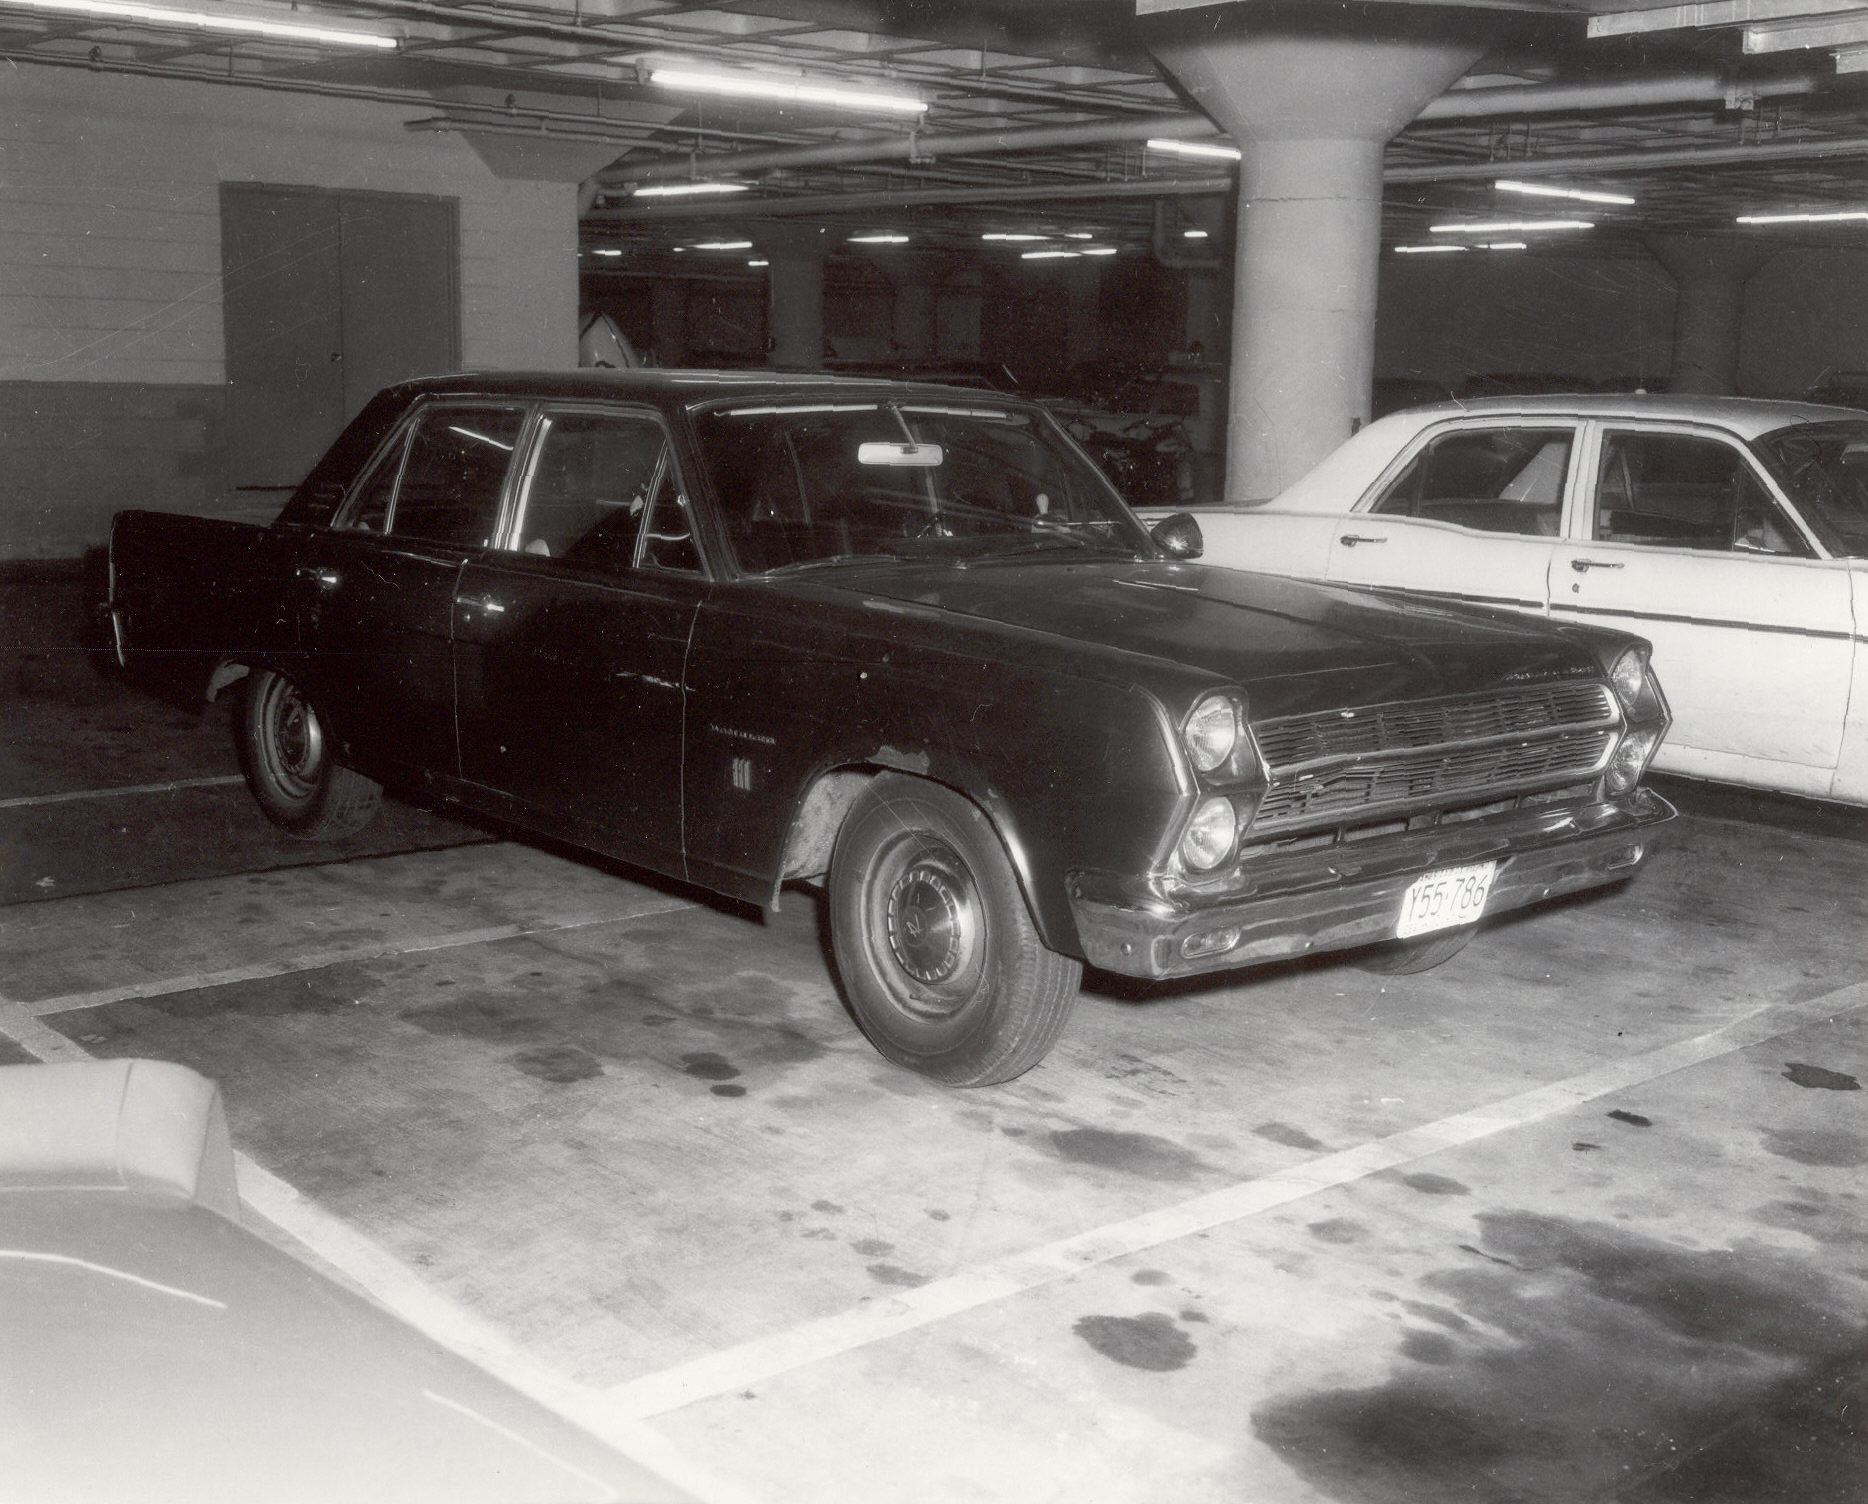 1965 AMC Ambassador unmarked